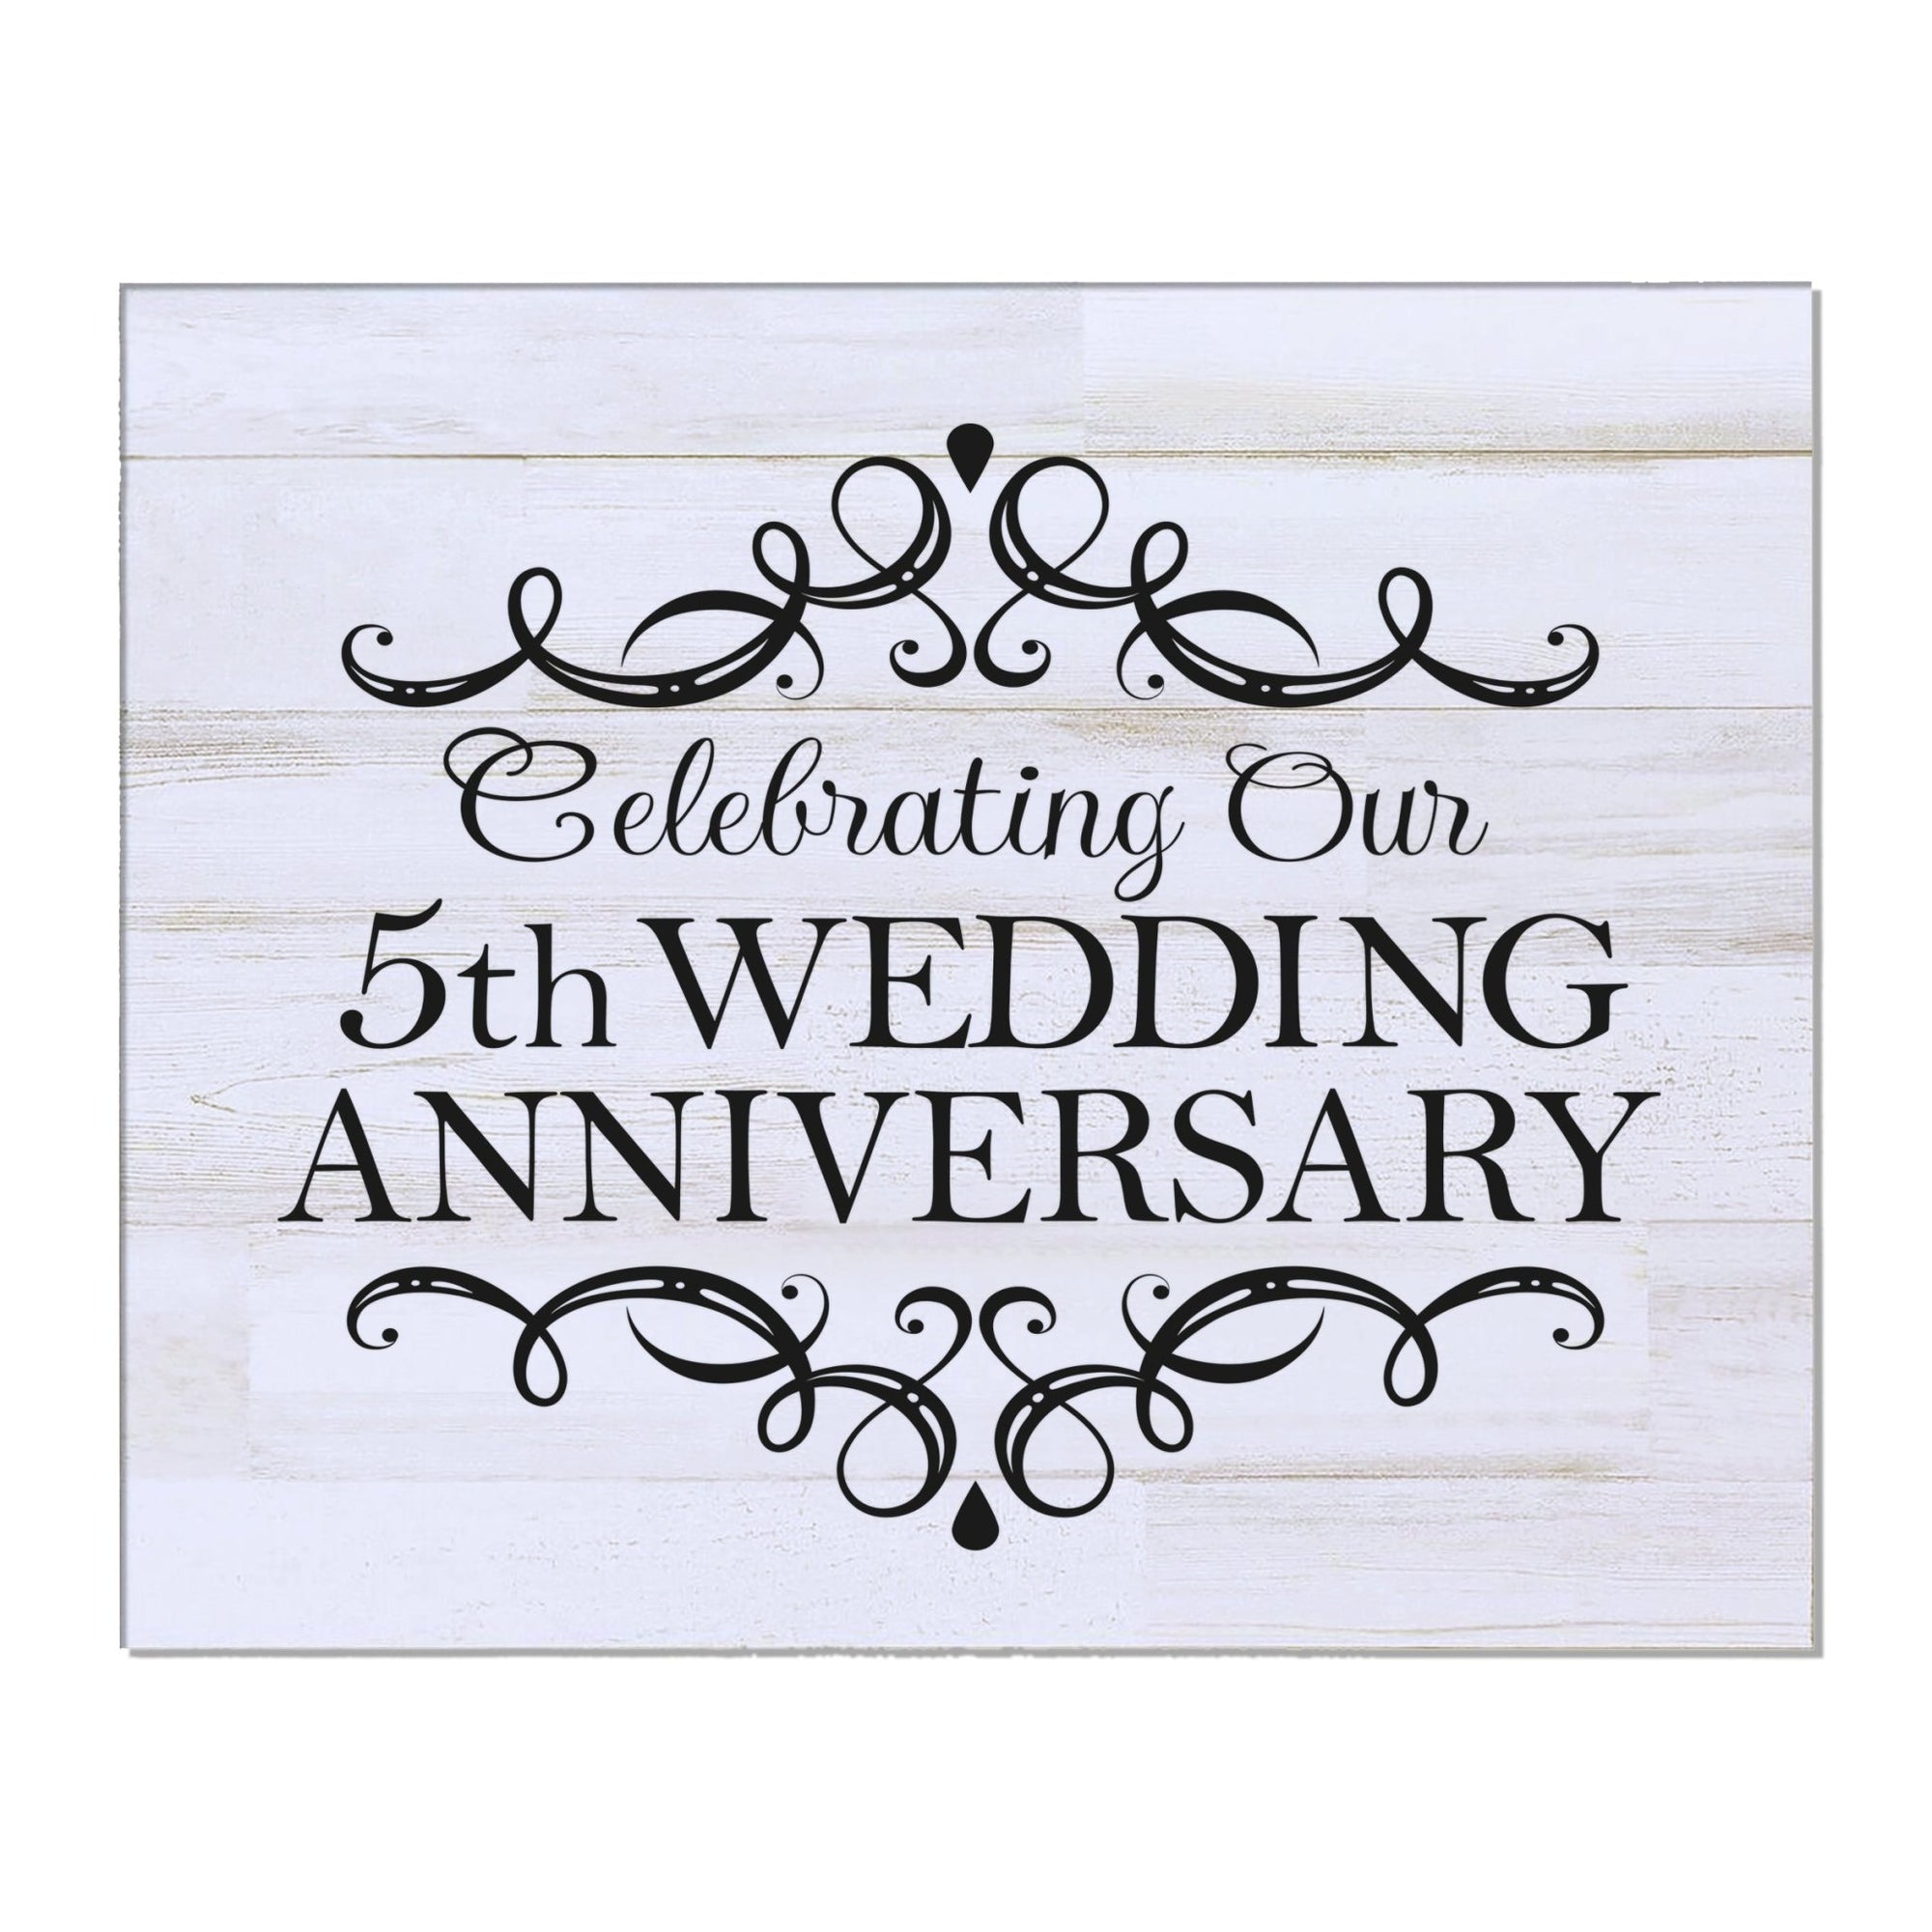 5th Wedding Anniversary Wall Plaque - Celebrating - LifeSong Milestones